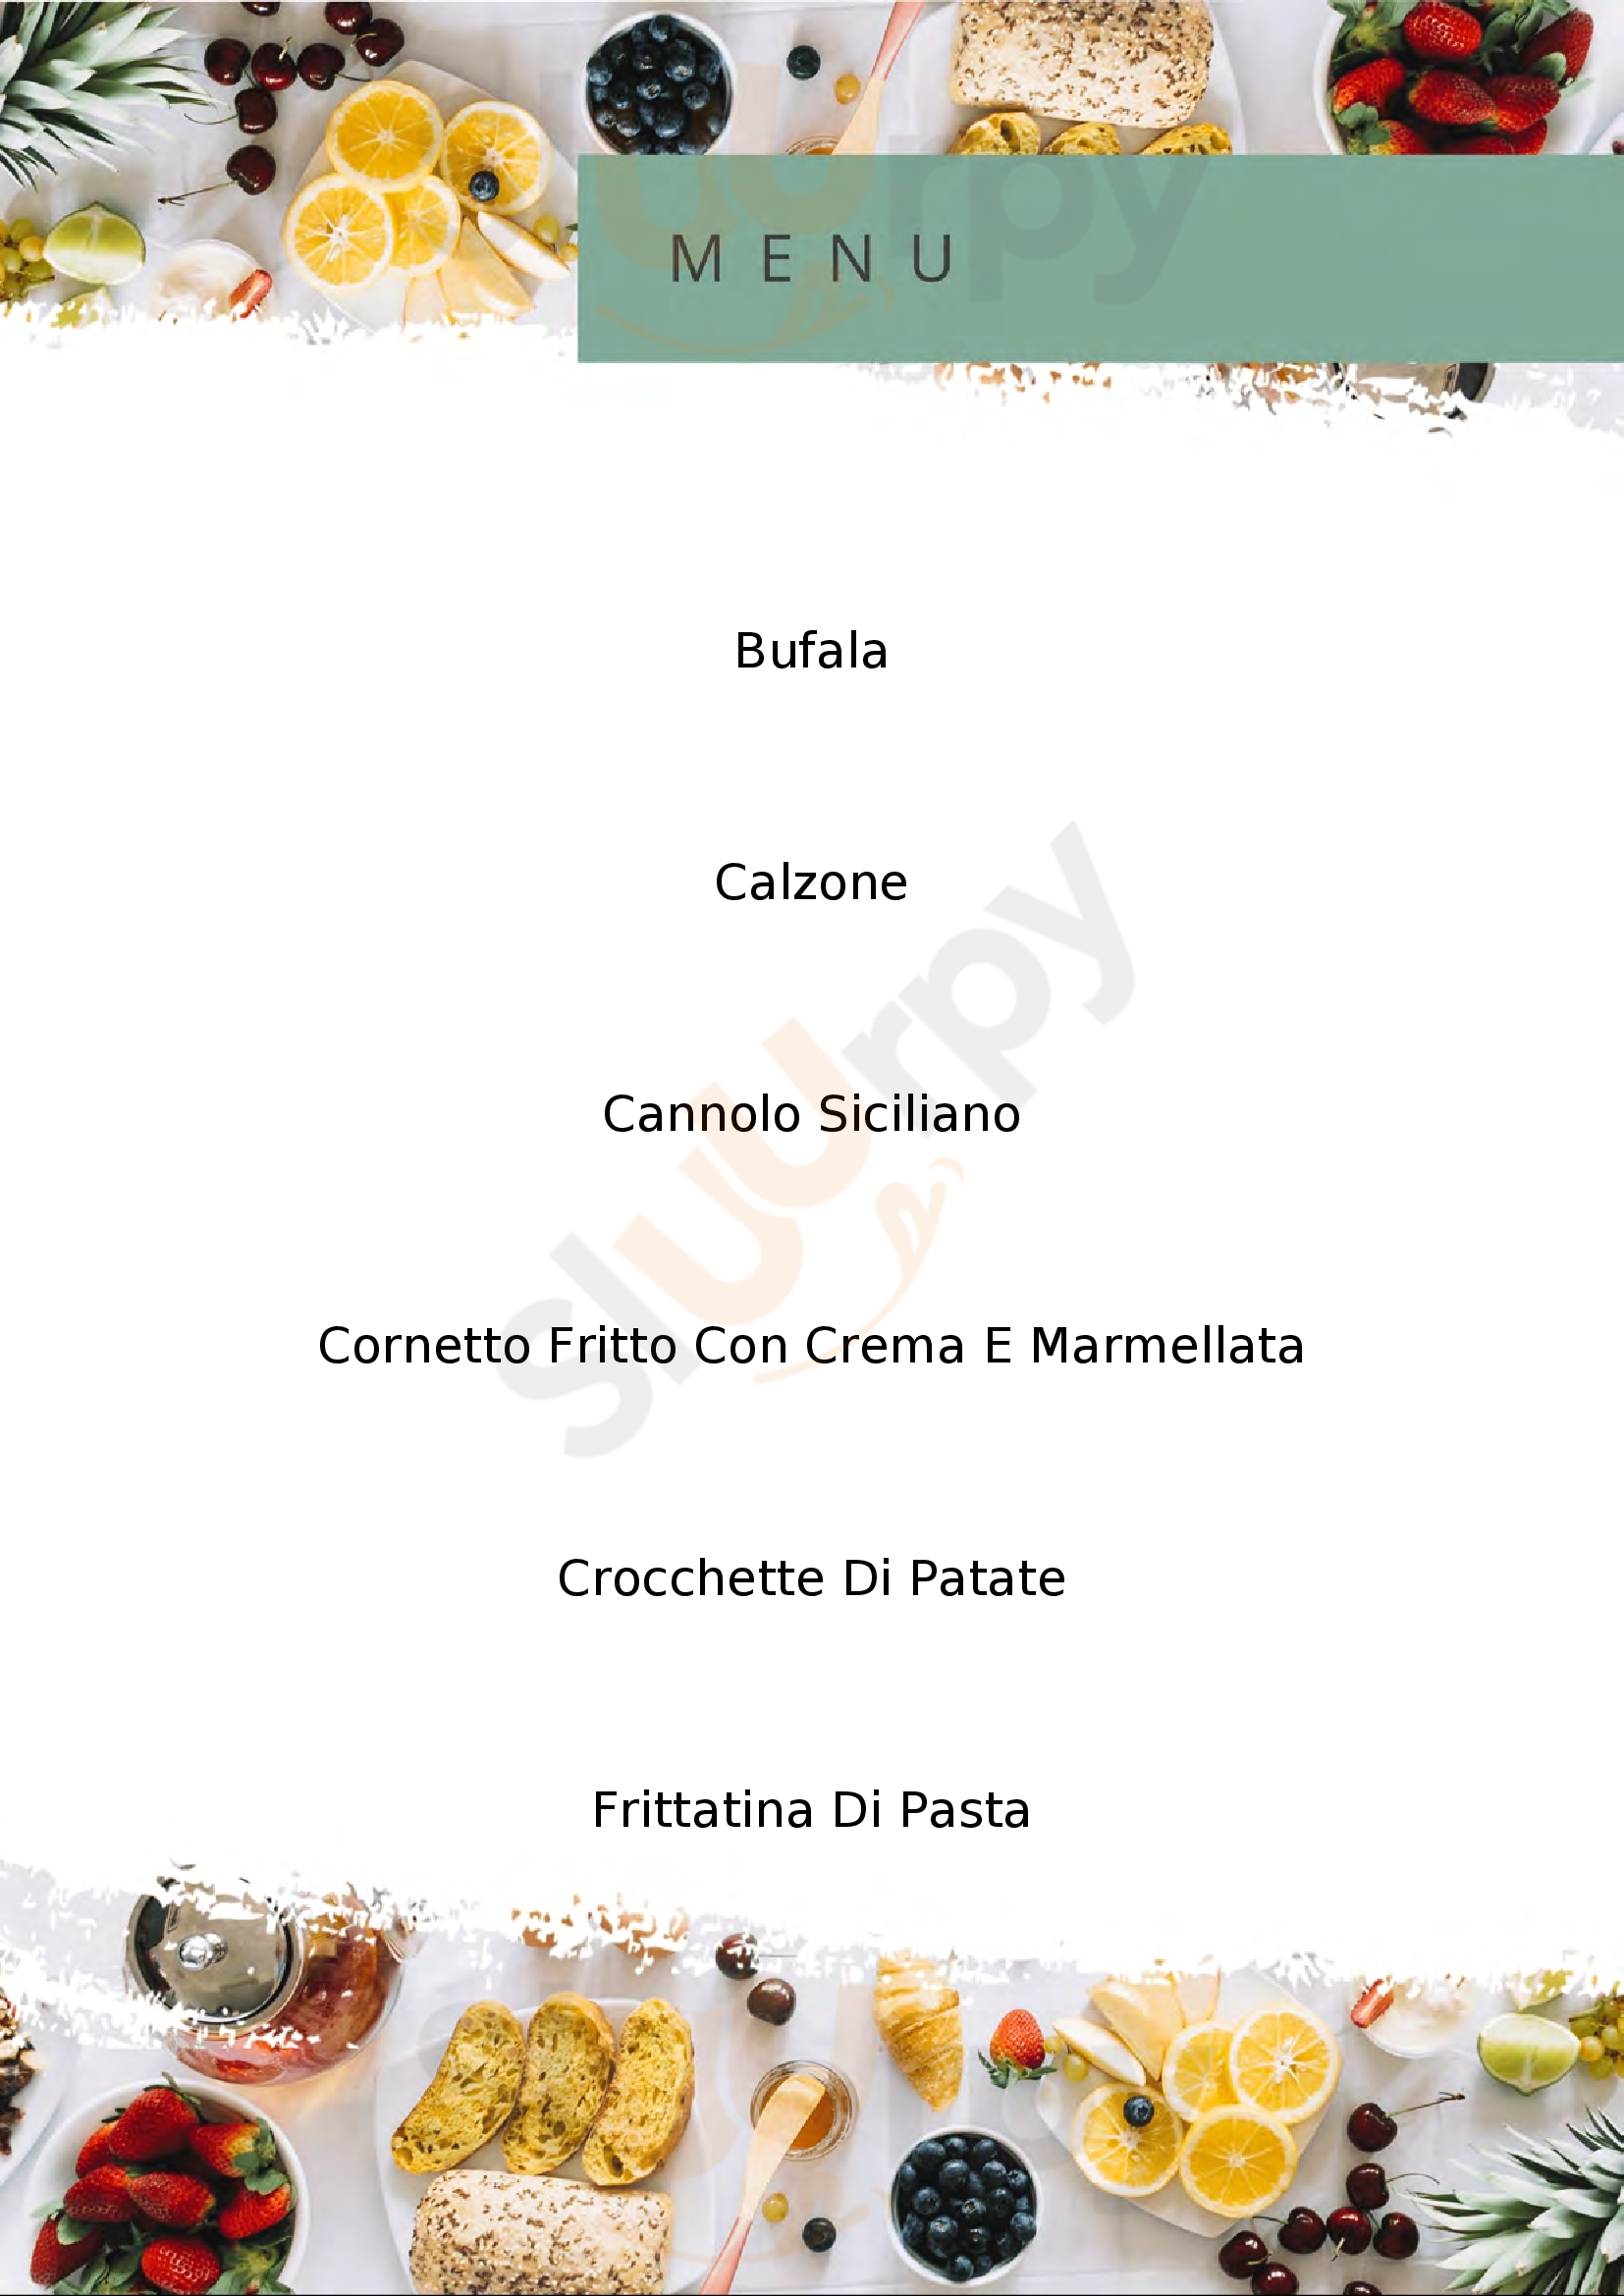 Voltasio Pizza Napoletana Cosenza menù 1 pagina